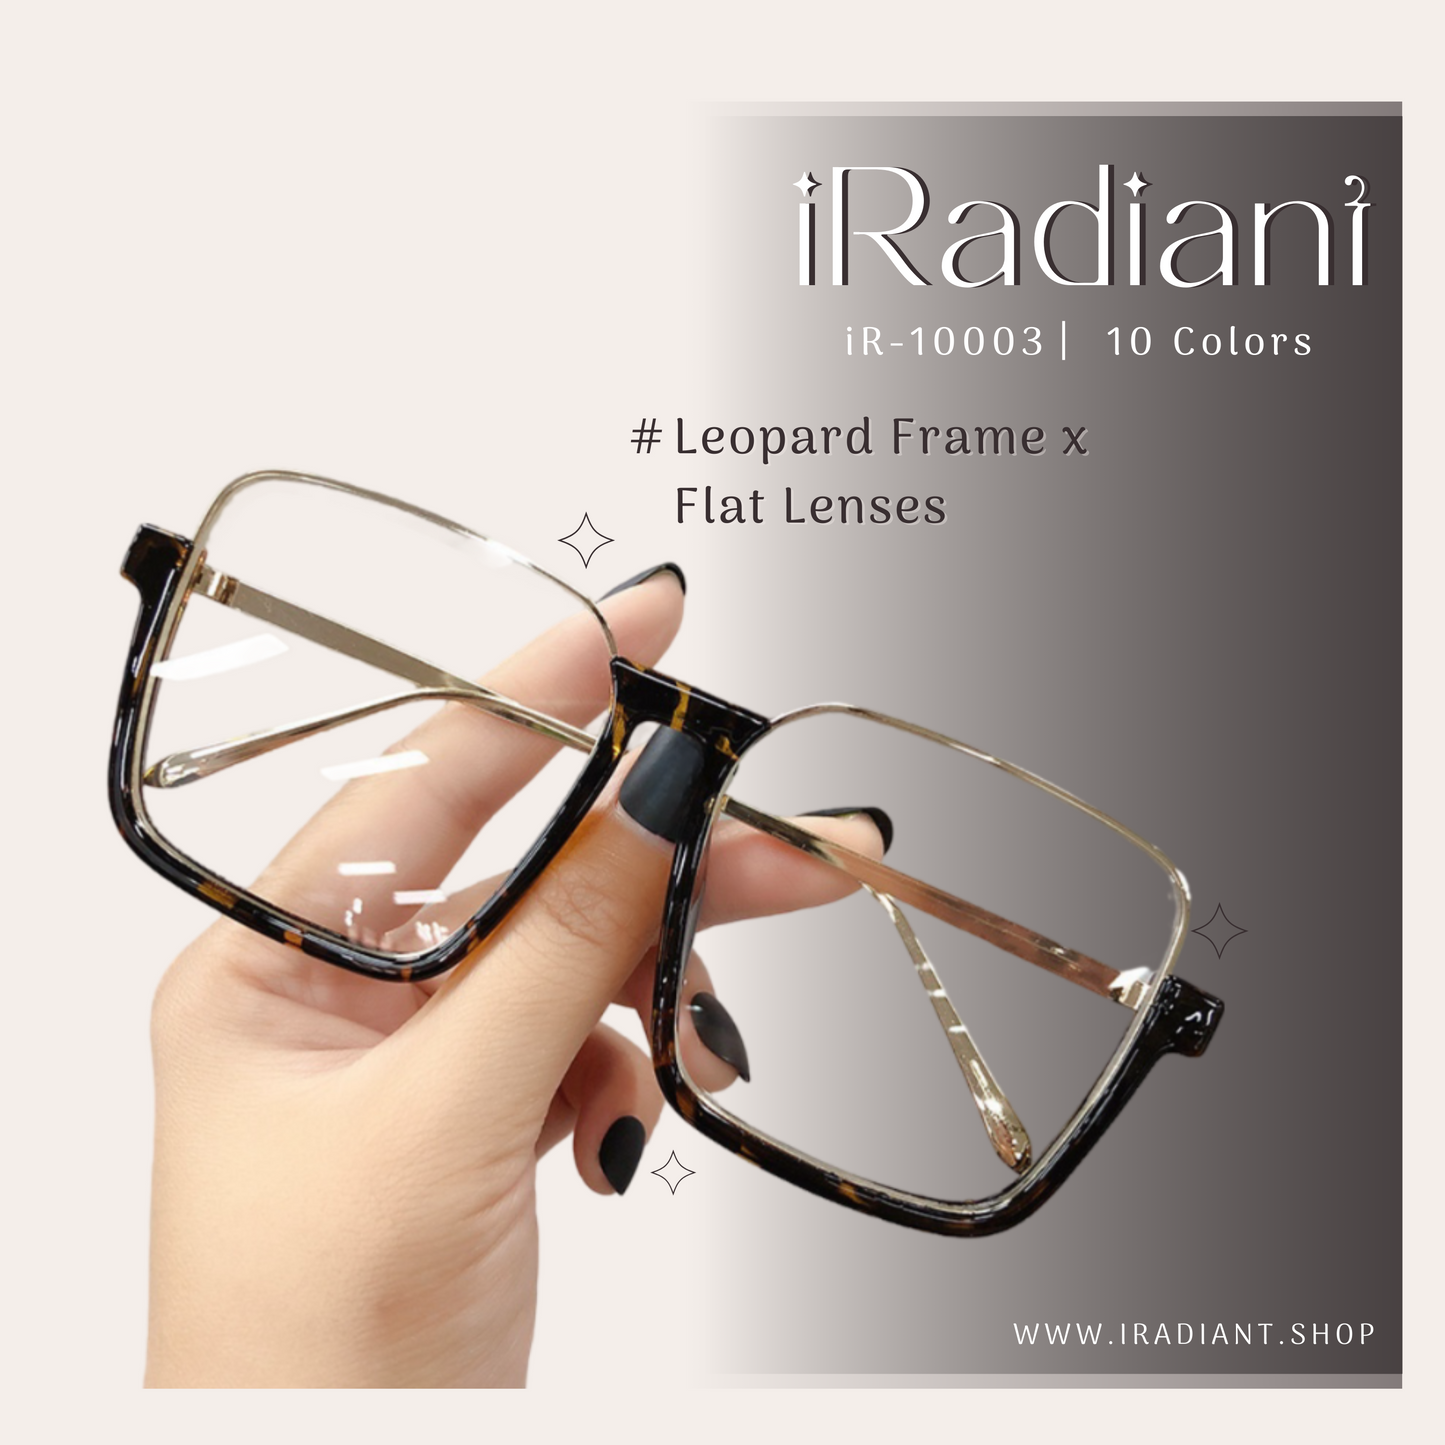 iR-10003-G ︳iRadiant Semi-Rimless Square Frame Shades ︳Unisex ︳Leopard Frame x Flat Lenses